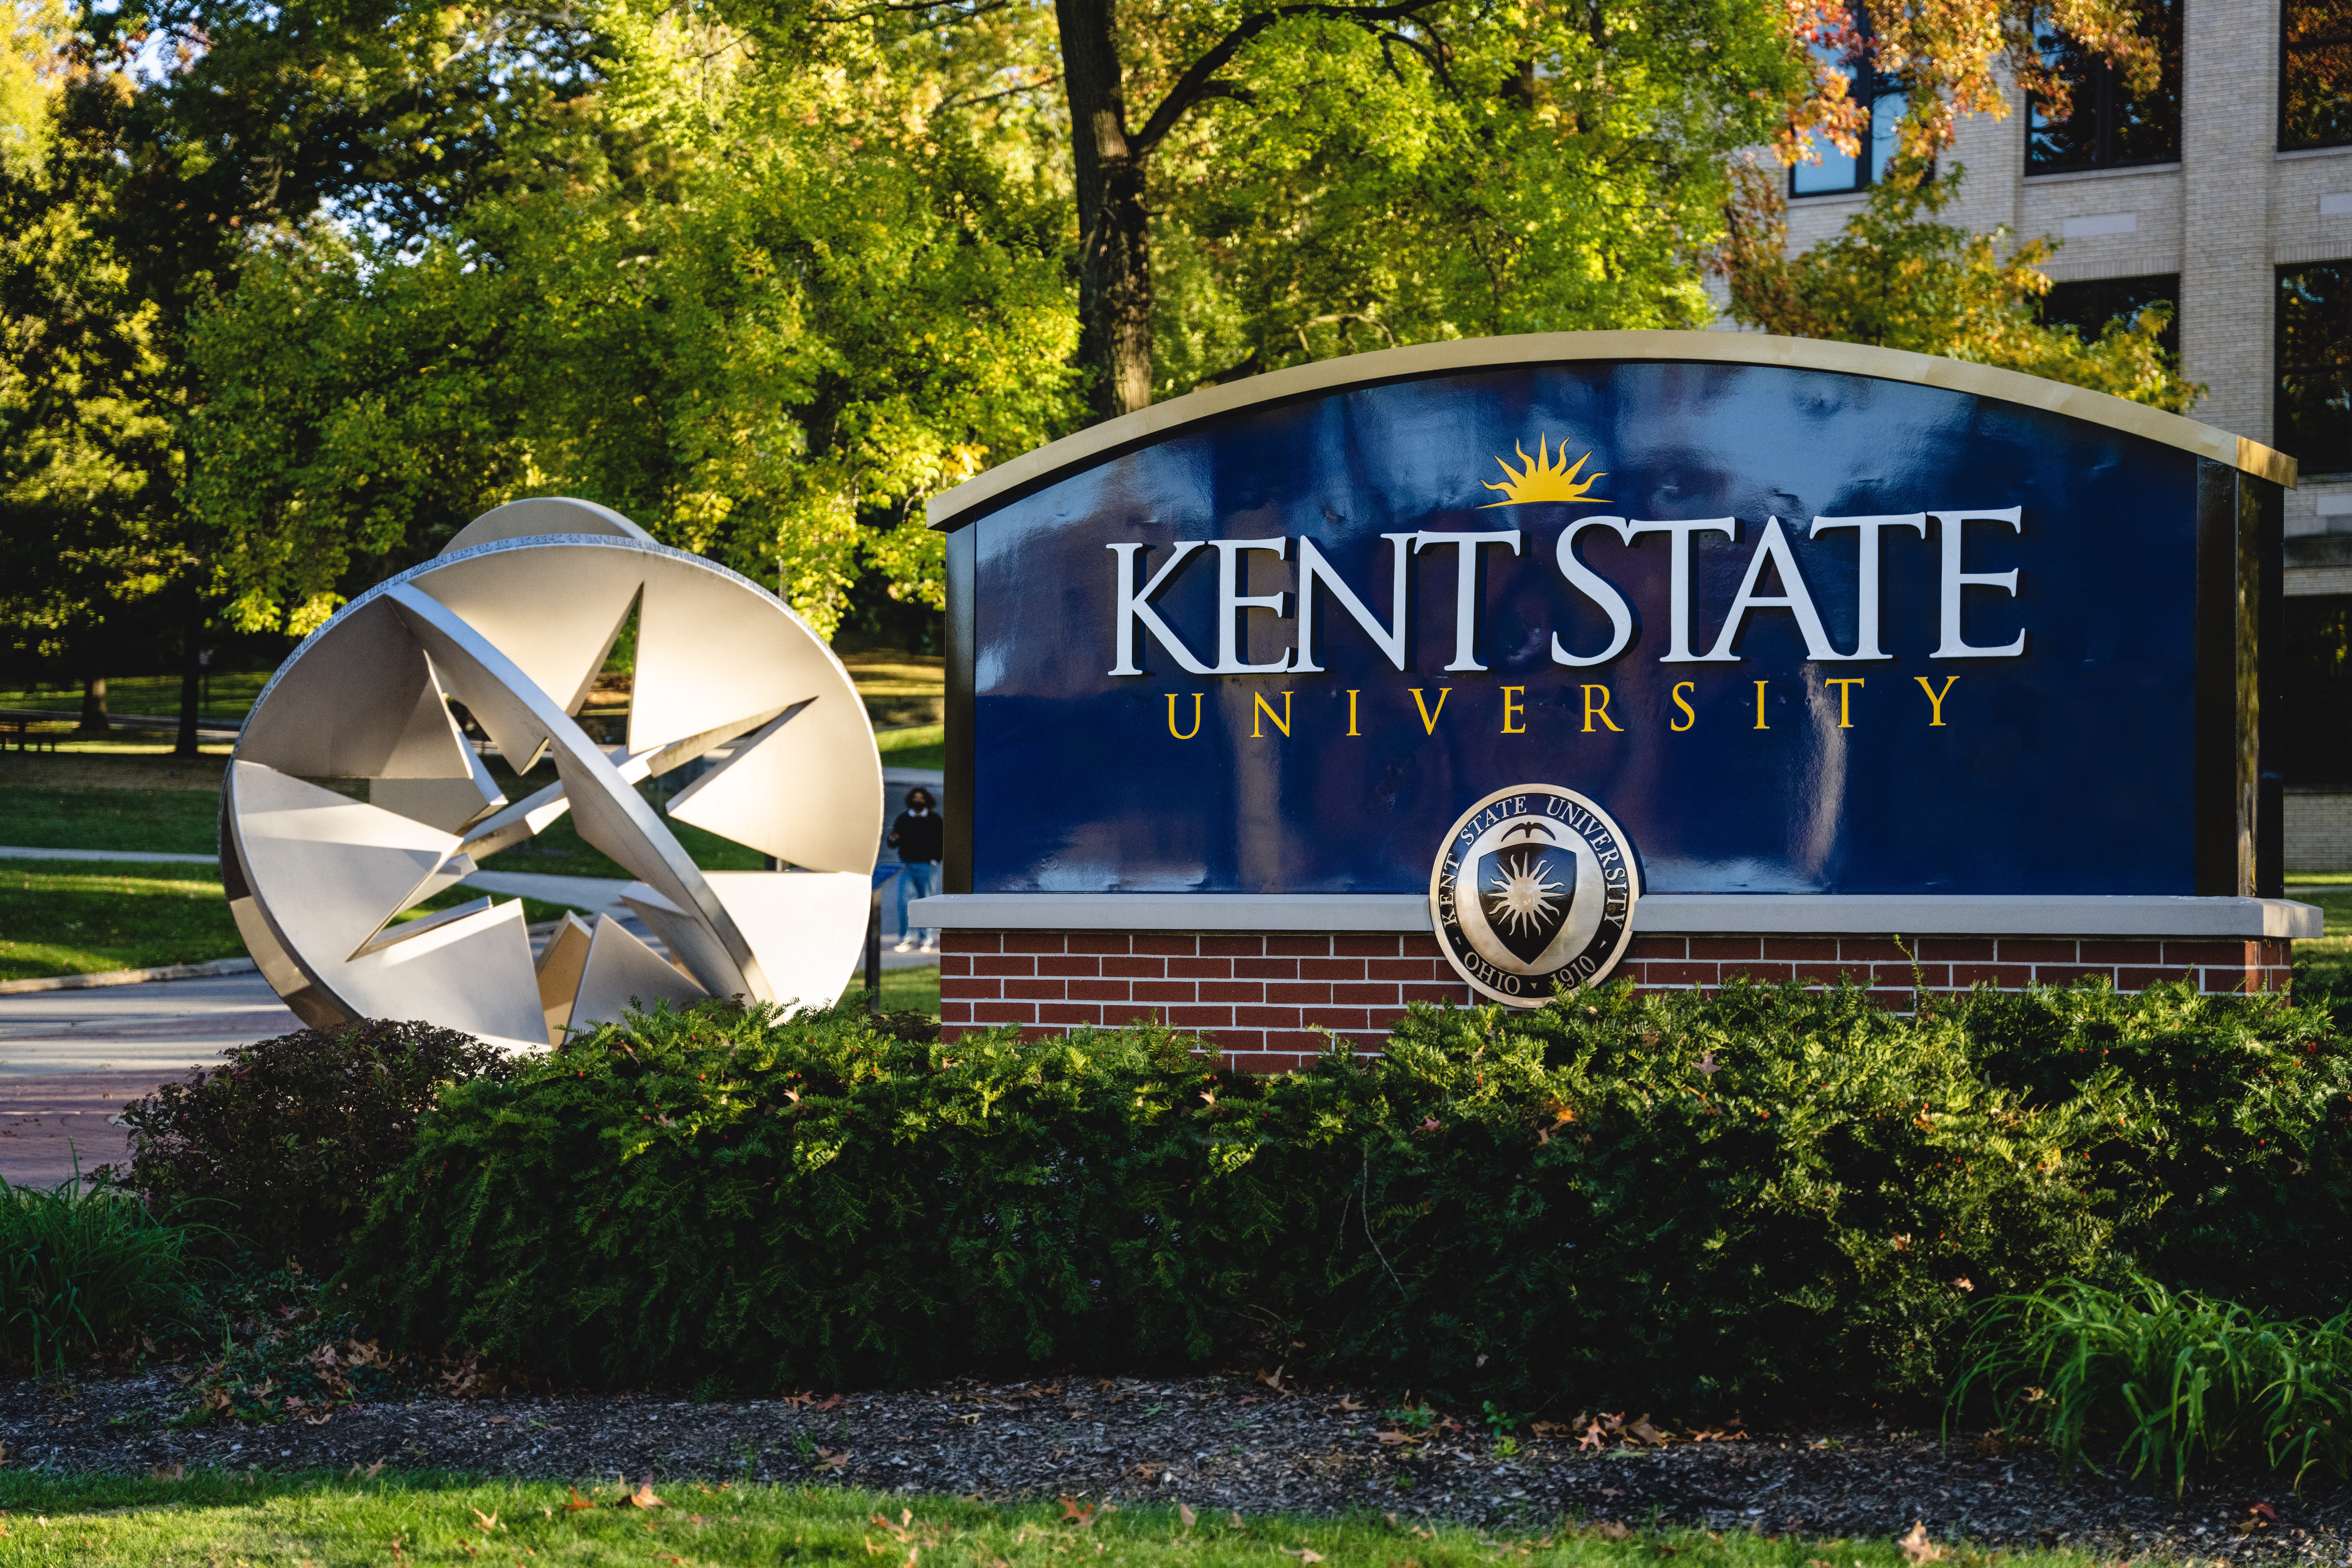 Kent state university sign at Jordan Court Apartments, Integrity Realty, Kent, OH